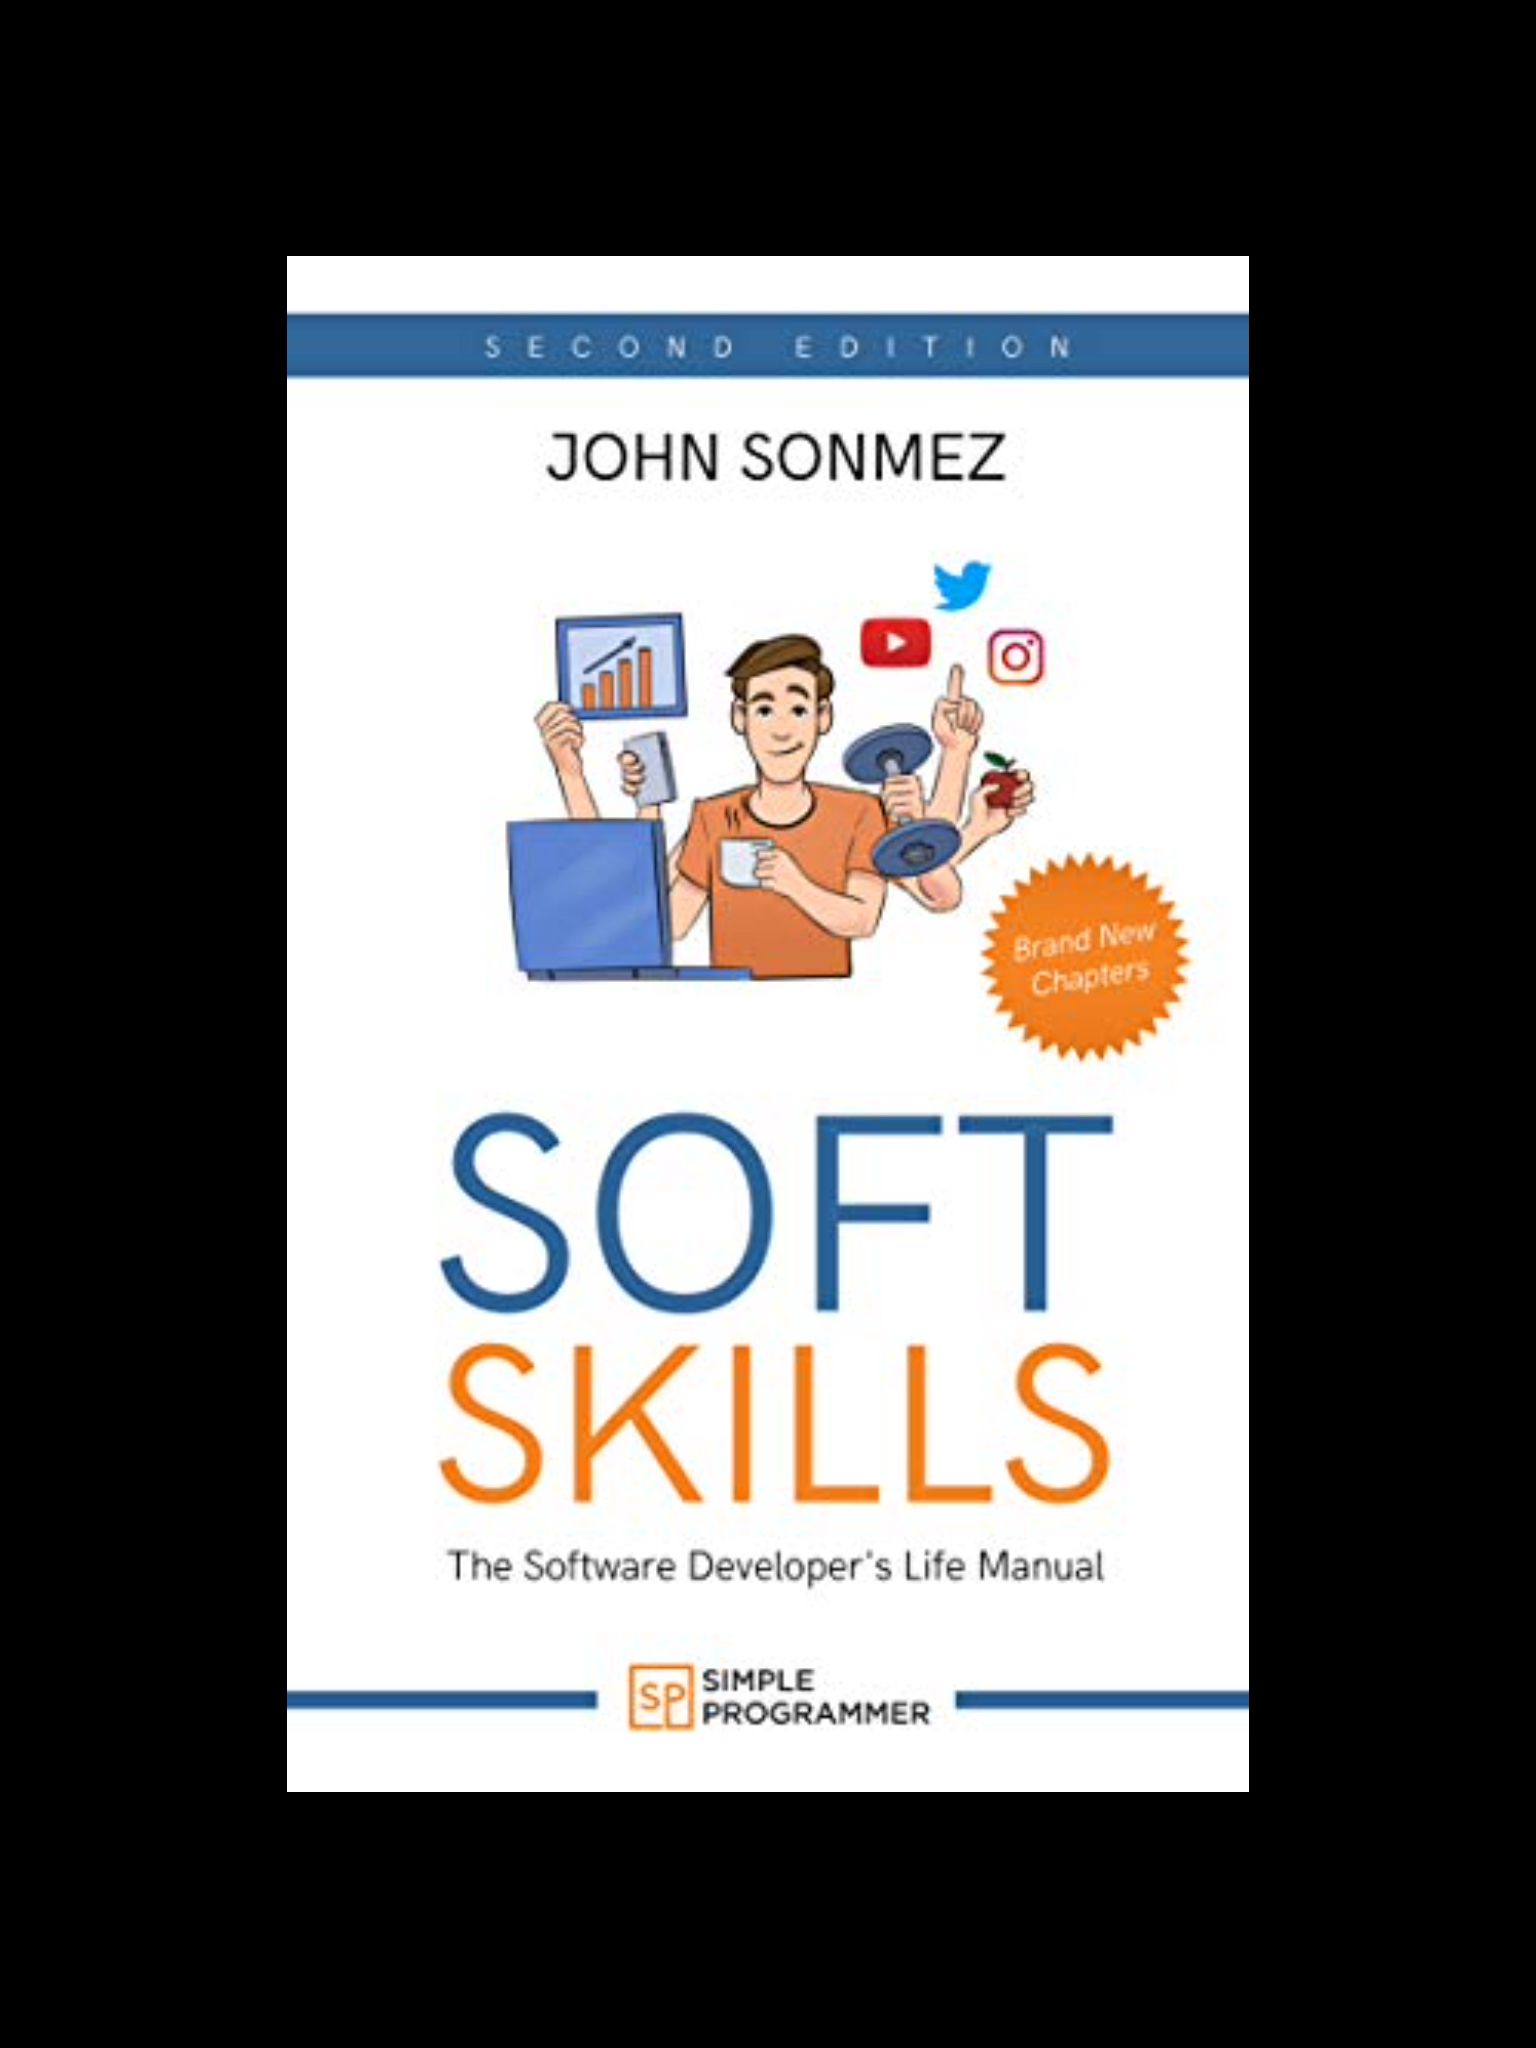 Soft Skills by John Sonmez